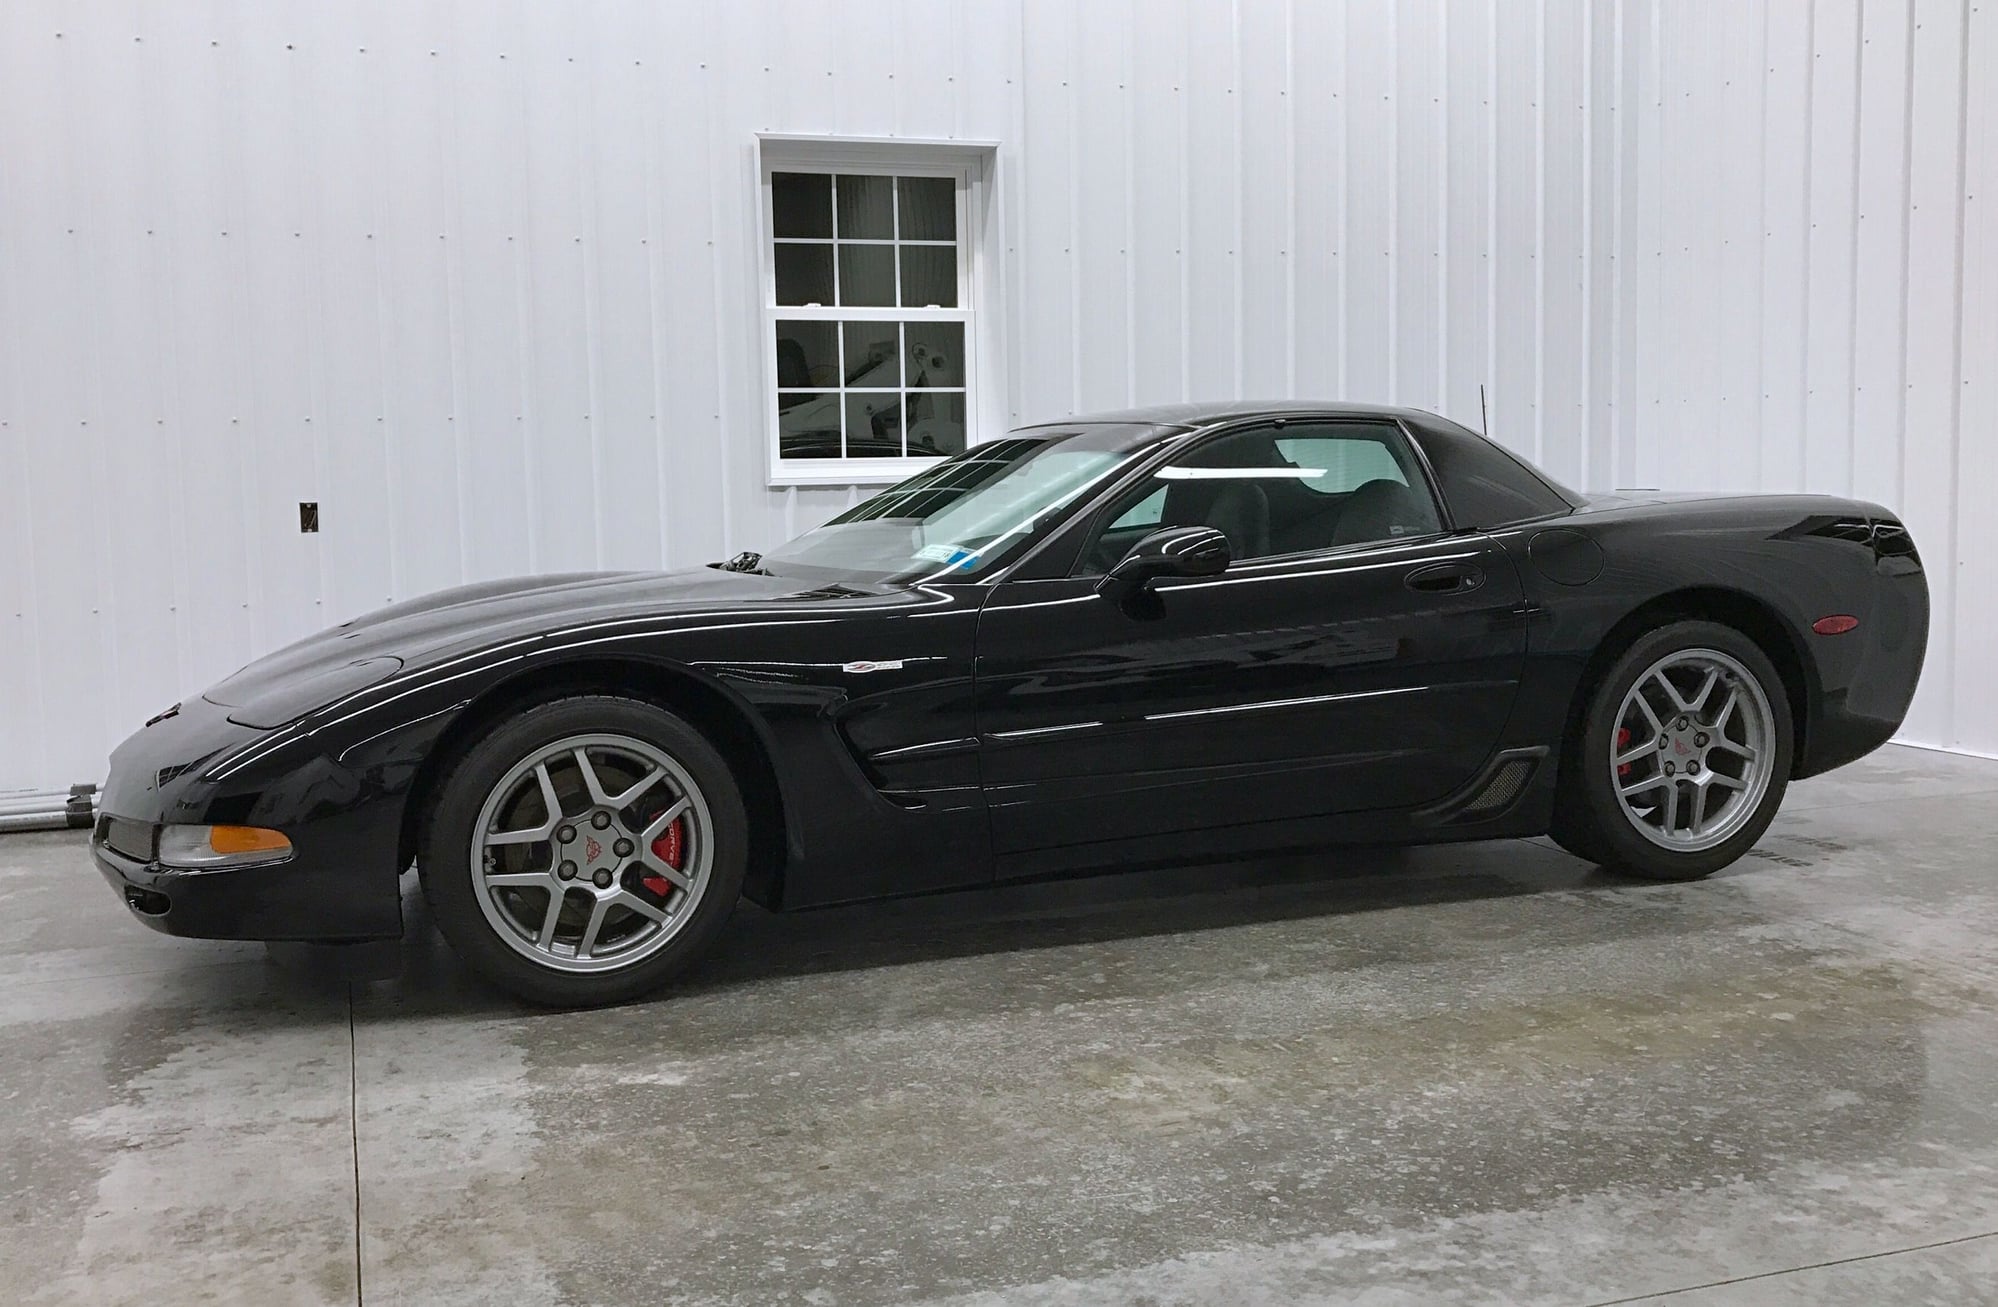 Fs For Sale 2002 Corvette Z06 Black 21k Miles Immaculate Condition